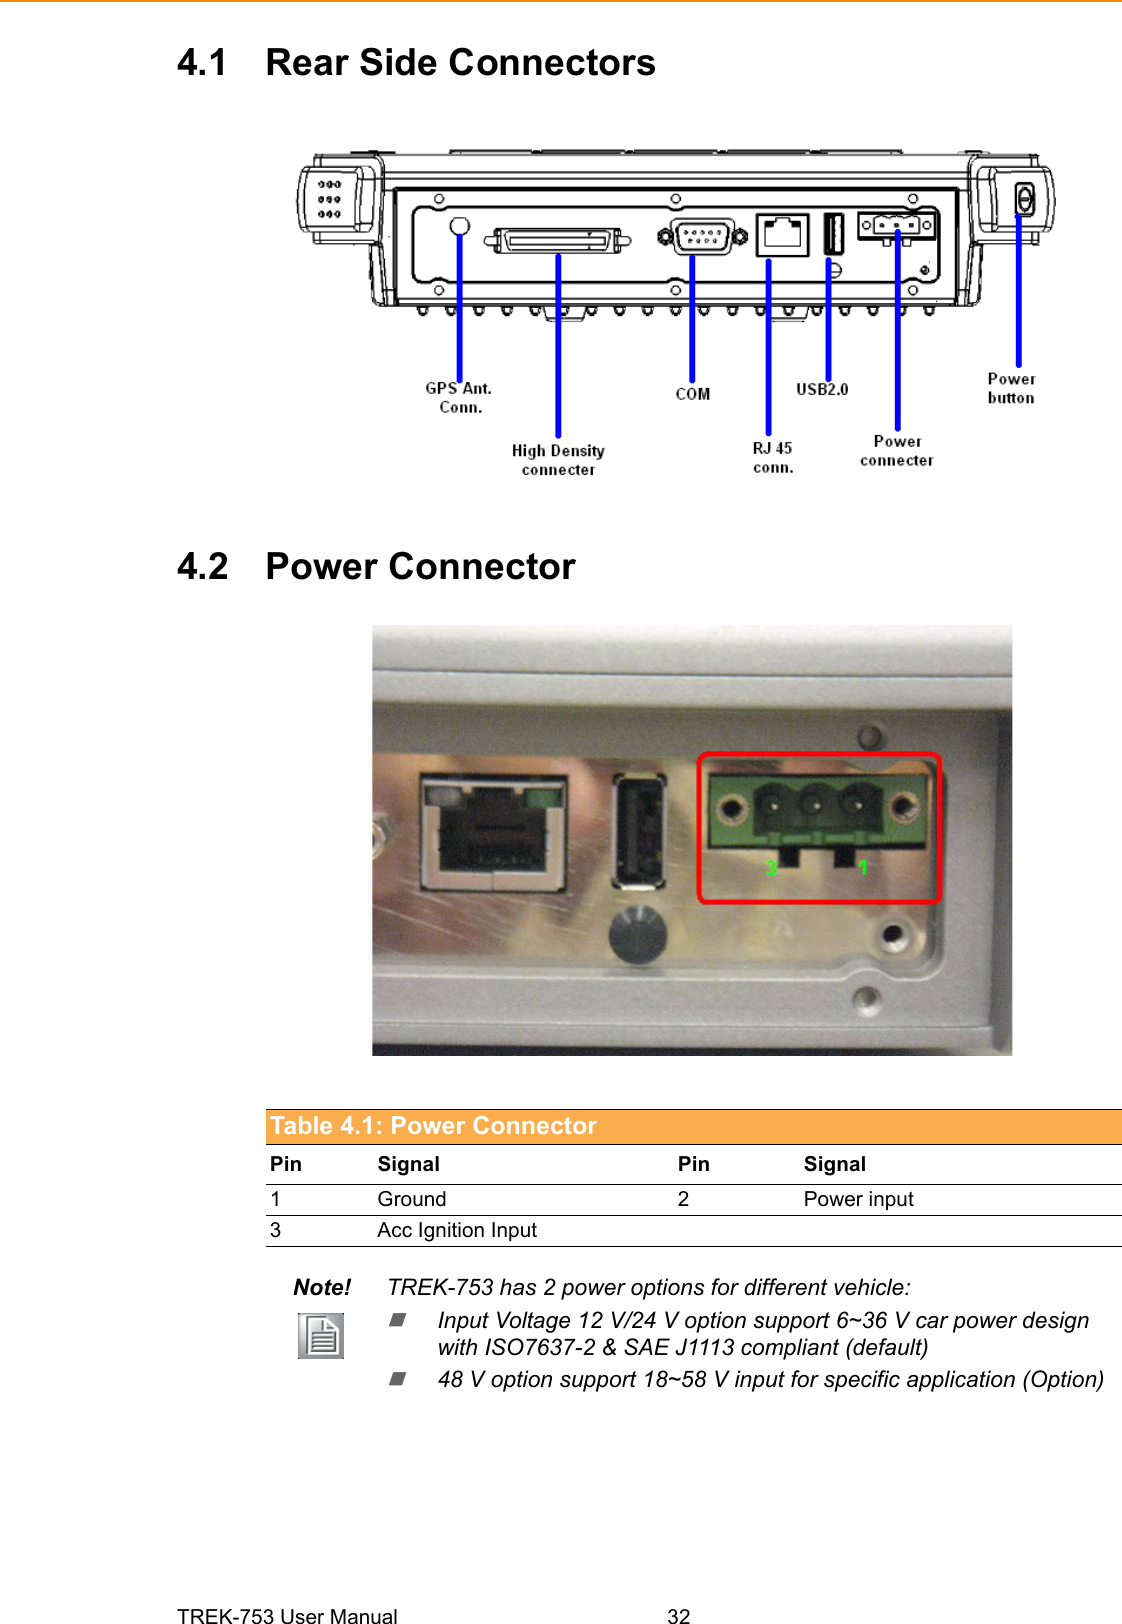 TREK-753 User Manual 324.1 Rear Side Connectors4.2 Power ConnectorTable 4.1: Power ConnectorPin Signal Pin Signal1 Ground 2 Power input 3 Acc Ignition InputNote! TREK-753 has 2 power options for different vehicle:Input Voltage 12 V/24 V option support 6~36 V car power design with ISO7637-2 &amp; SAE J1113 compliant (default)48 V option support 18~58 V input for specific application (Option)